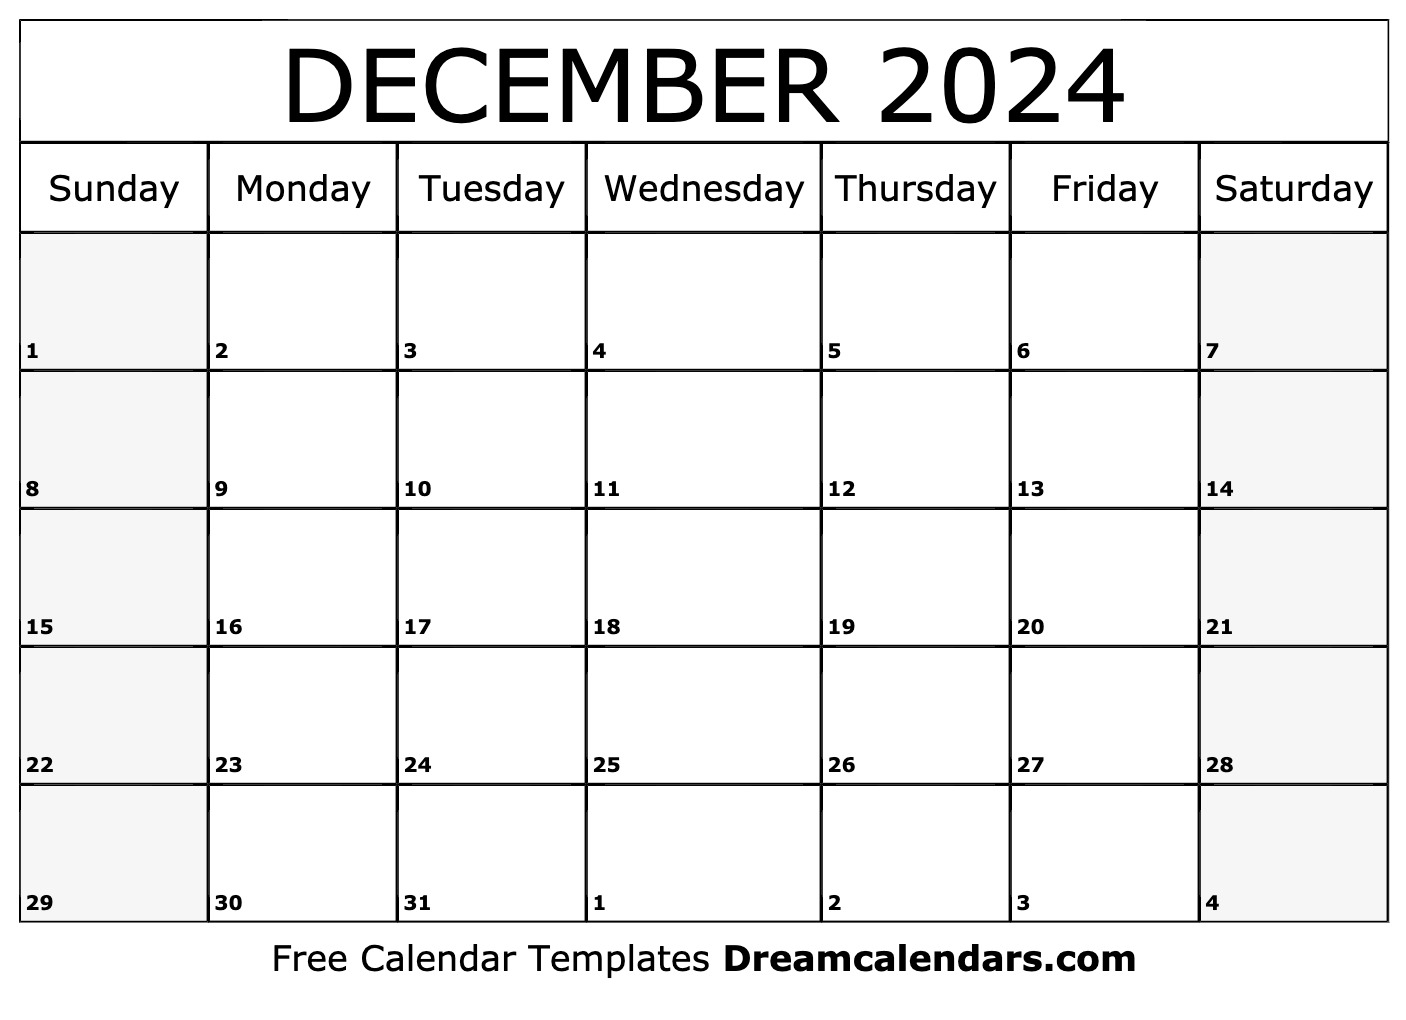 December 2024 Calendar | Free Blank Printable With Holidays for Free Printable December 2024 Calendar